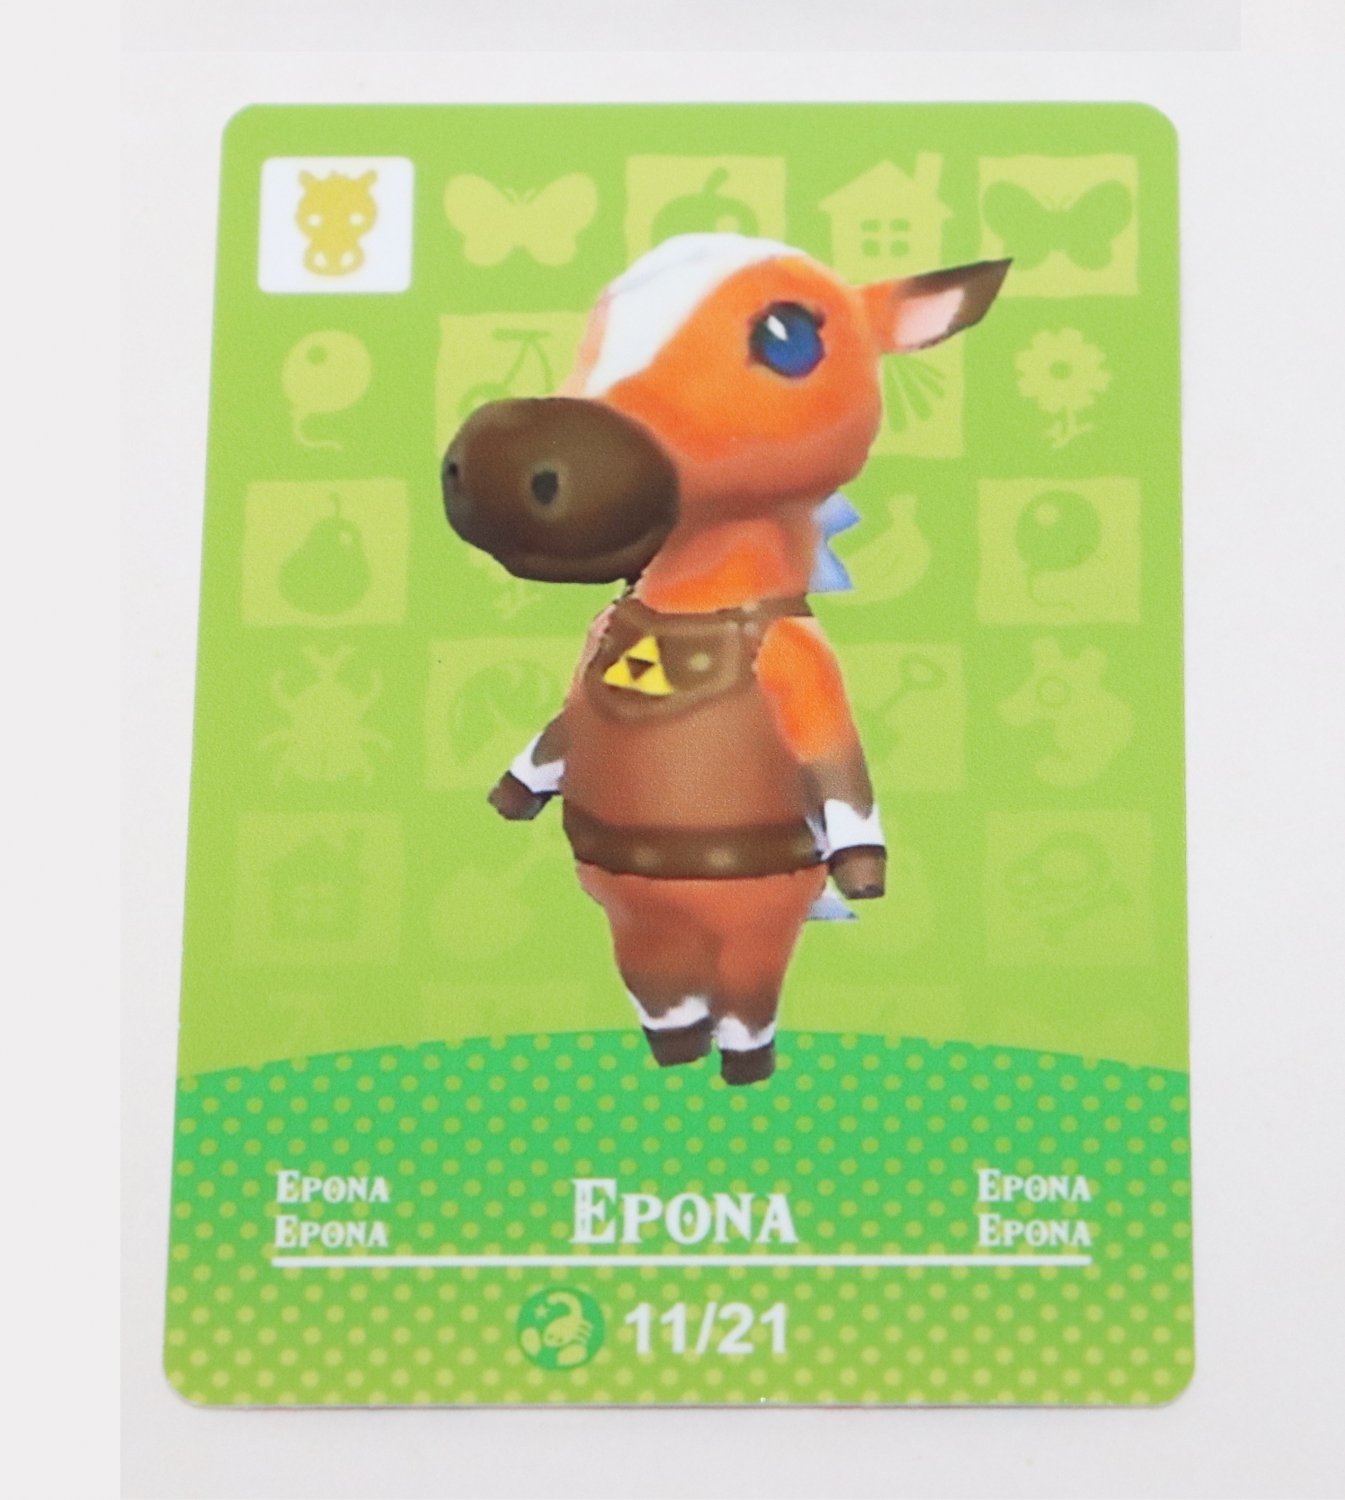 Animal Crossing Special Amiibo card Epona